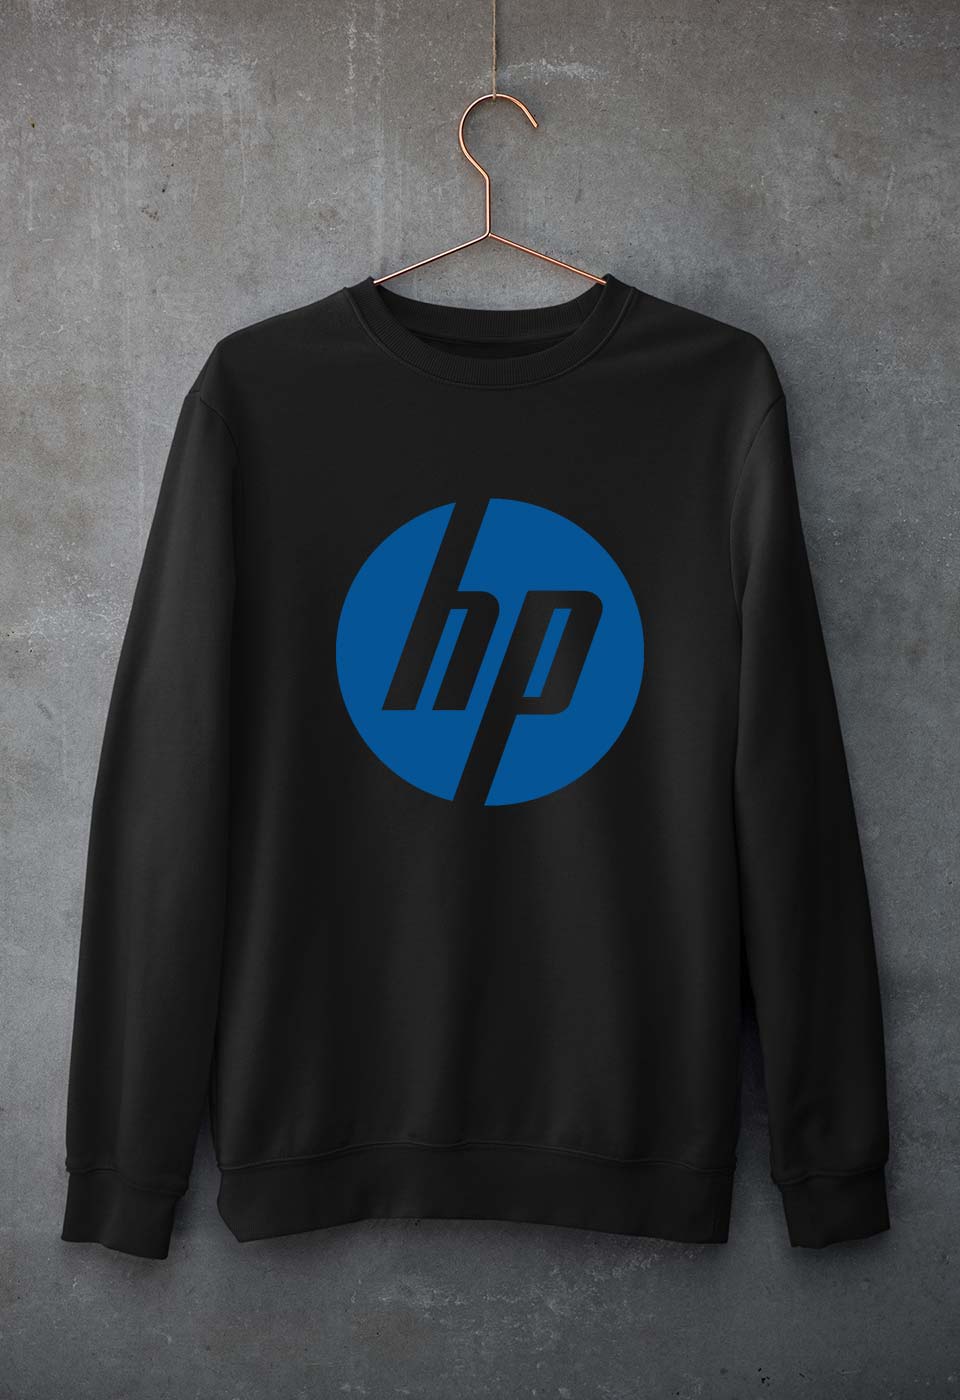 Hewlett-Packard(HP) Unisex Sweatshirt for Men/Women-S(40 Inches)-Black-Ektarfa.online